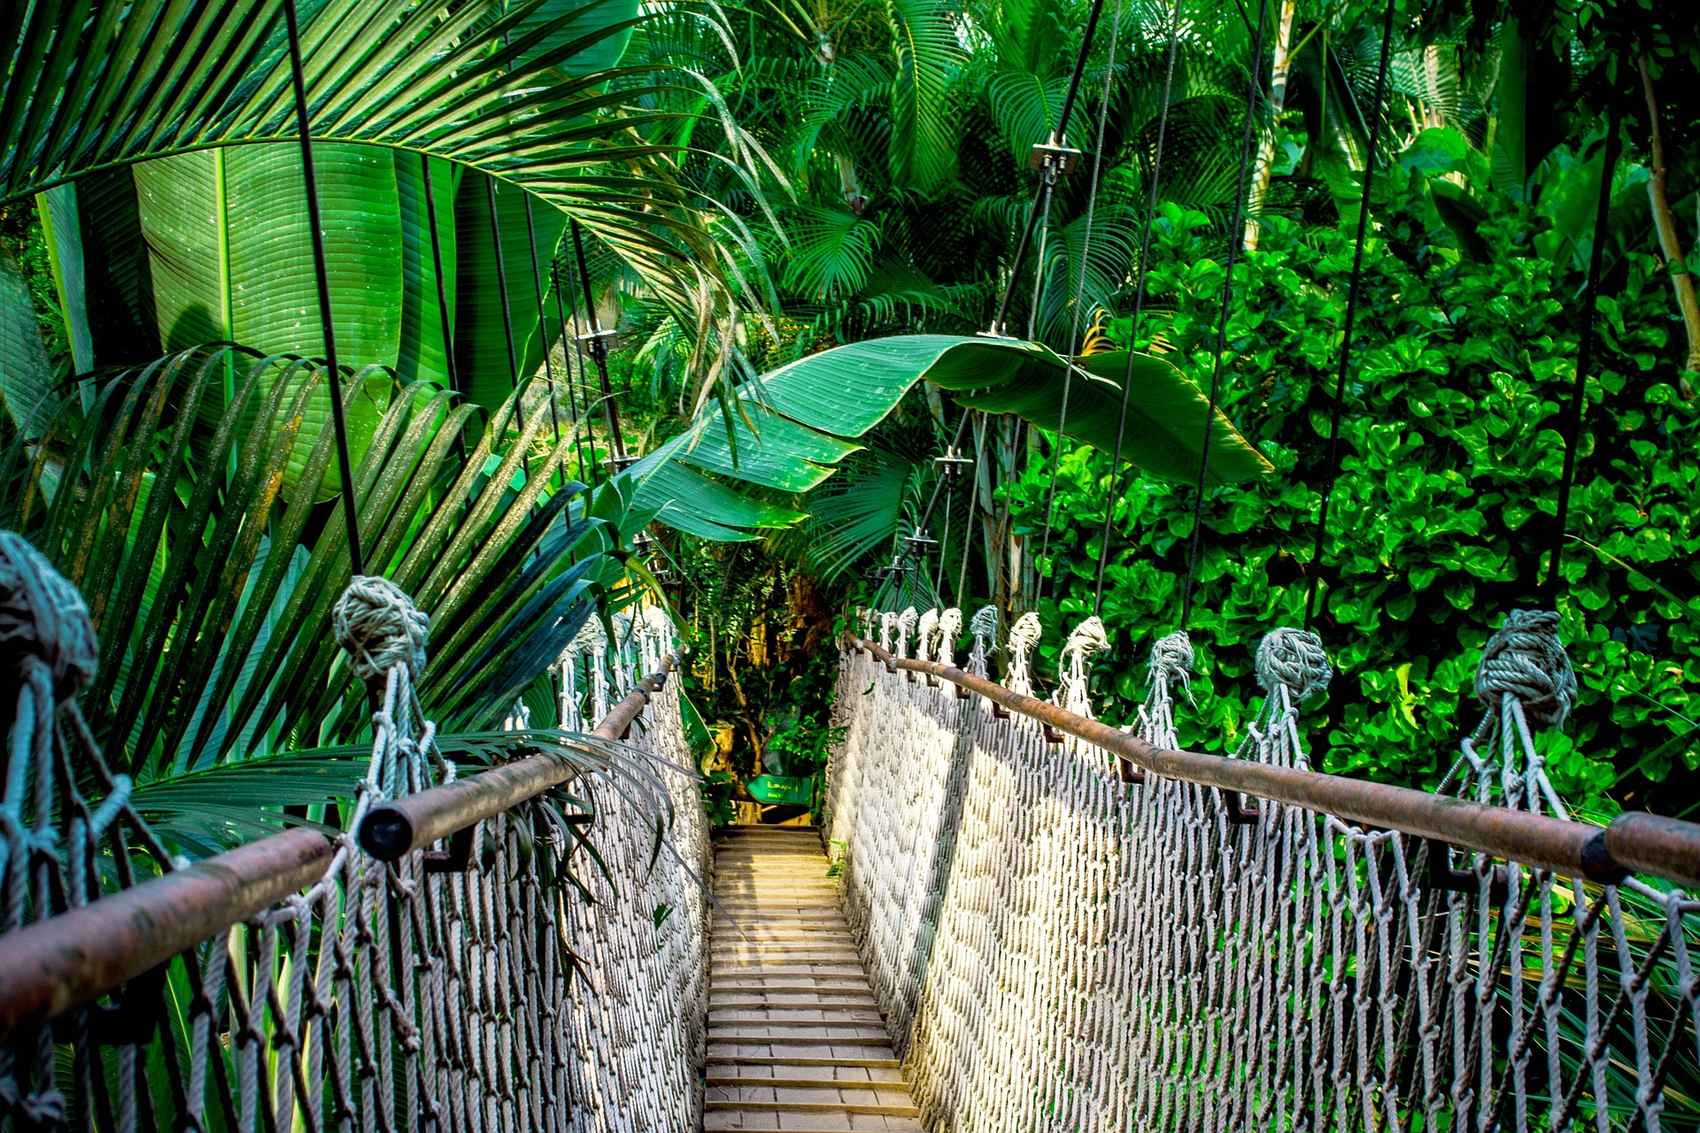 Bridge through the trees in the Amazon